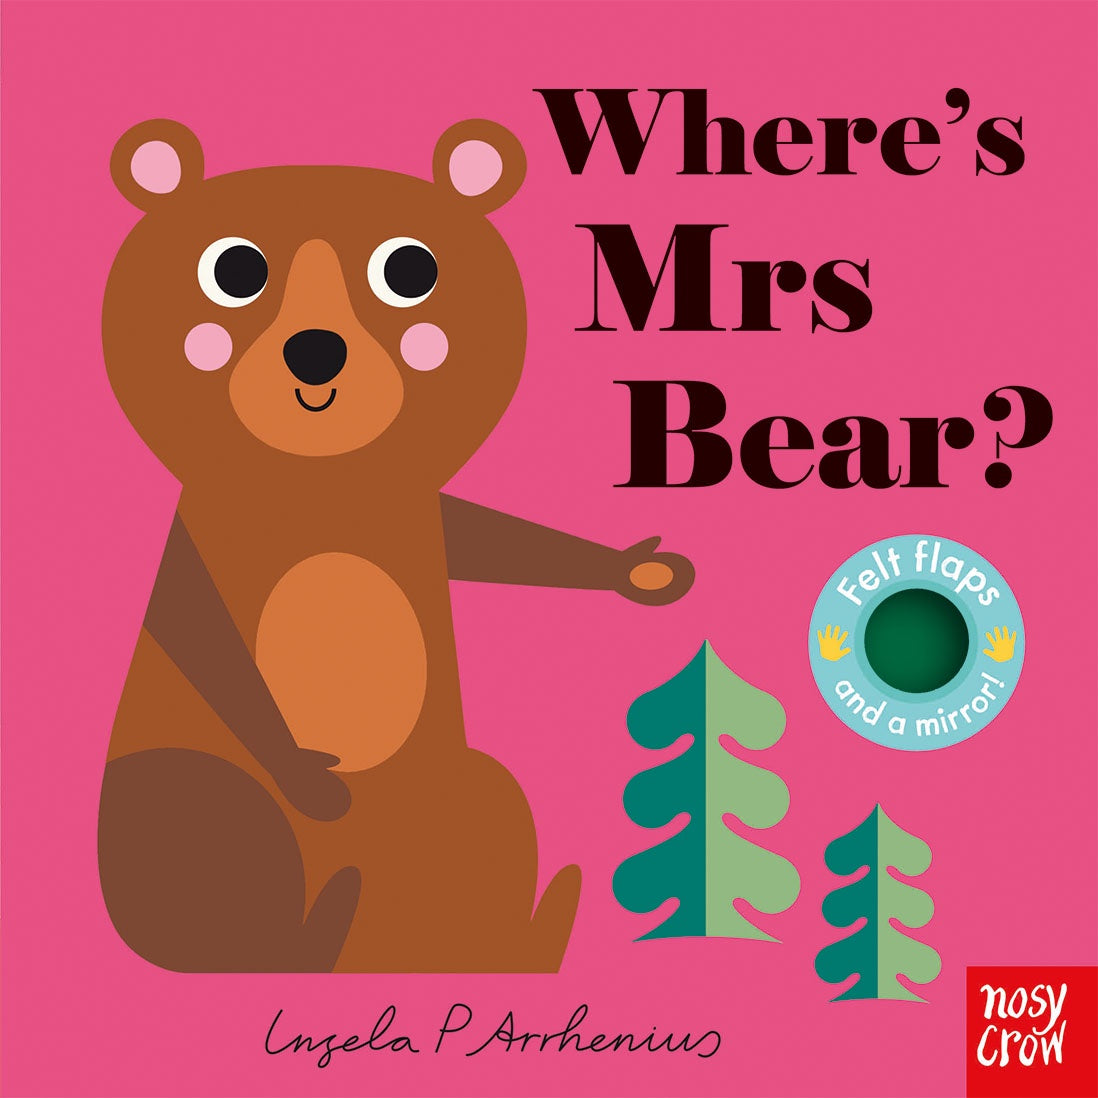 Where's Mrs Bear